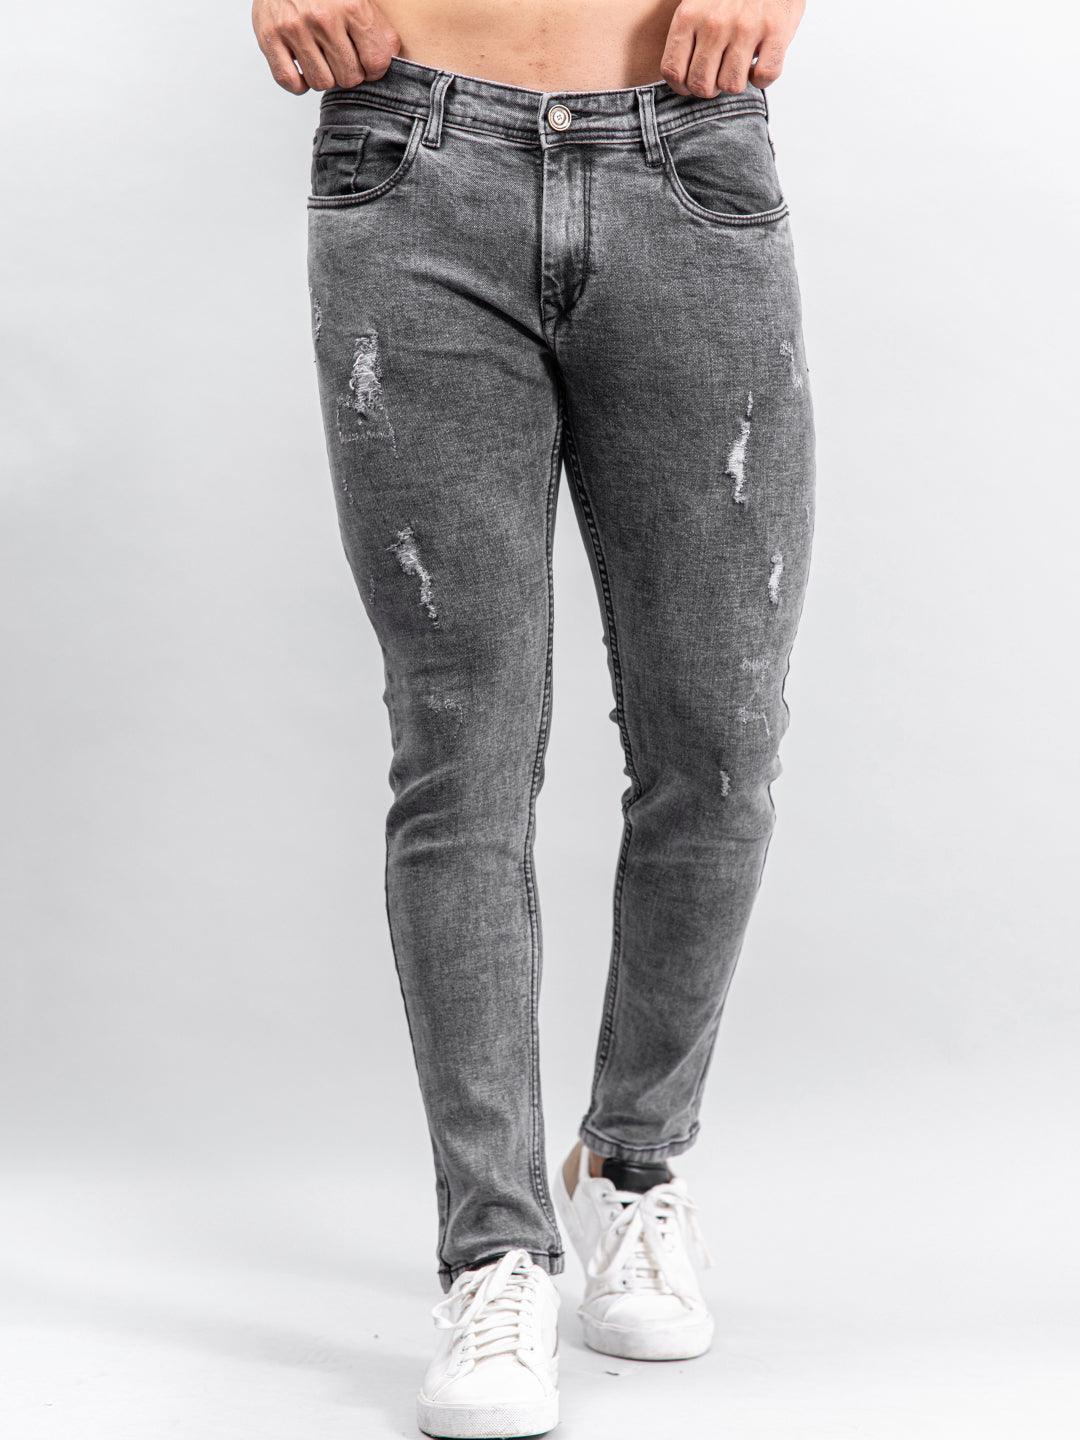 grey denim ankle length stretchable mens jeans